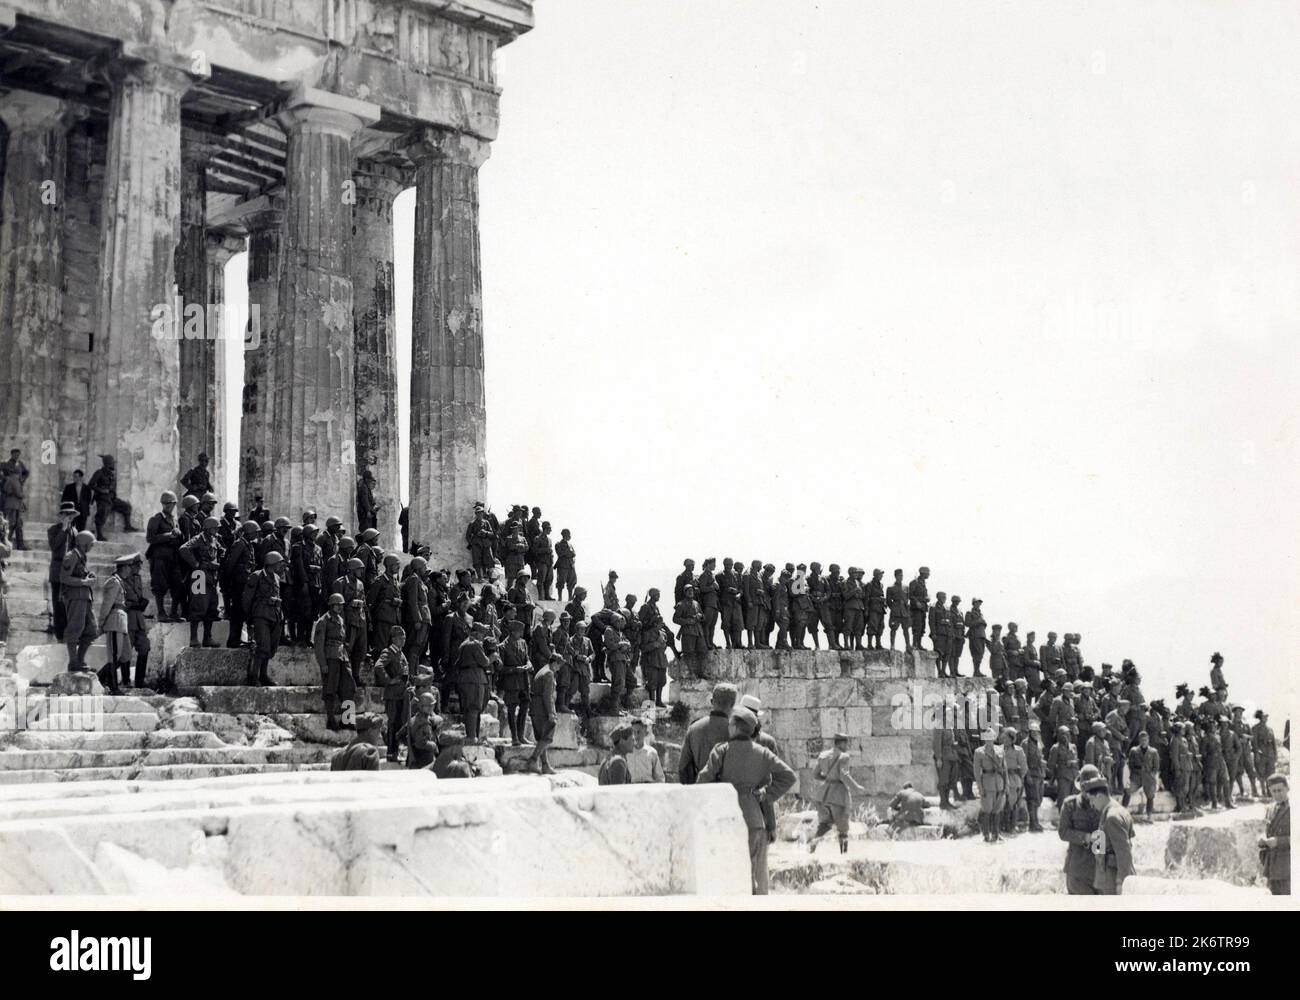 1942 ca. Athens , GREECE : The italian military fascist  troups  invade the Greece. In this photo some of italian platoons ( Alpini and Bersaglieri ) visiting the Acropolis celebrated Temple monuments . Unknown photographer - ALPINO -- SECONDA GUERRA MONDIALE - World War 2nd - WWII - FRONTE GRECO - ATENE - GRECIA - ACROPOLI - miliari soldati italiani - COLONIALISMO - COLONIALISM - FASCIST - FASCISTA - FASCISMO - FASCISM - TURISMO - tourism - archeology - archeologia - tempio - temple - templio - HISTORY - FOTO STORICHE ---  Archivio GBB Stock Photo